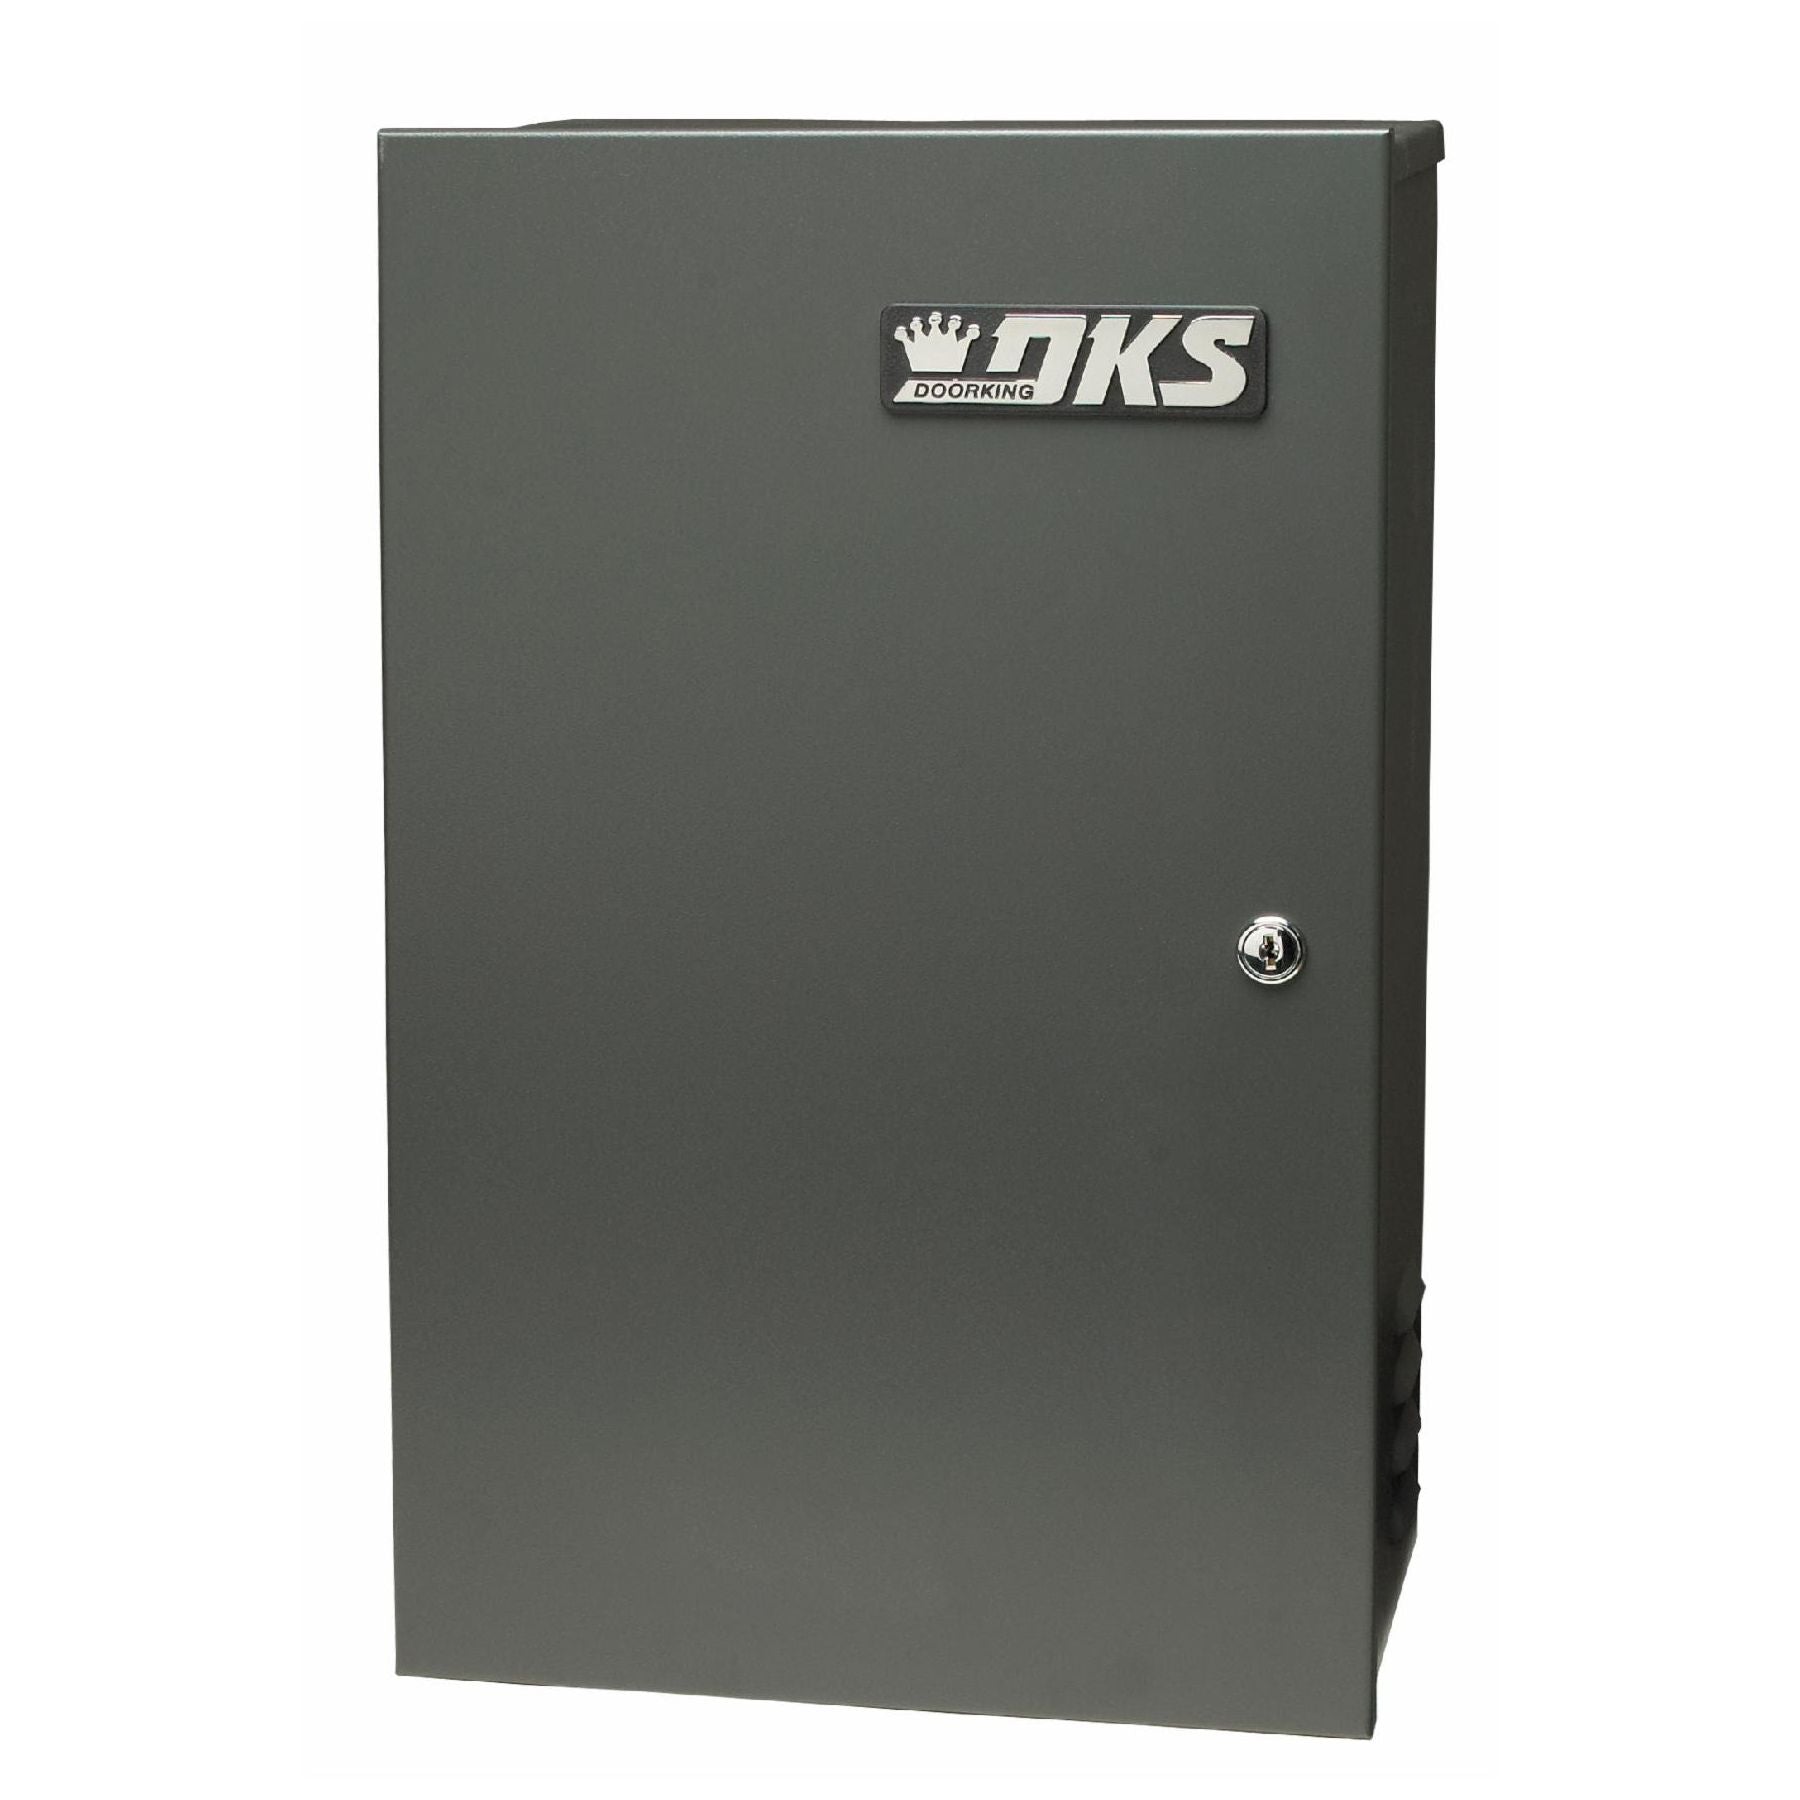 Doorking 4302-311 Standard Control Box (110V)